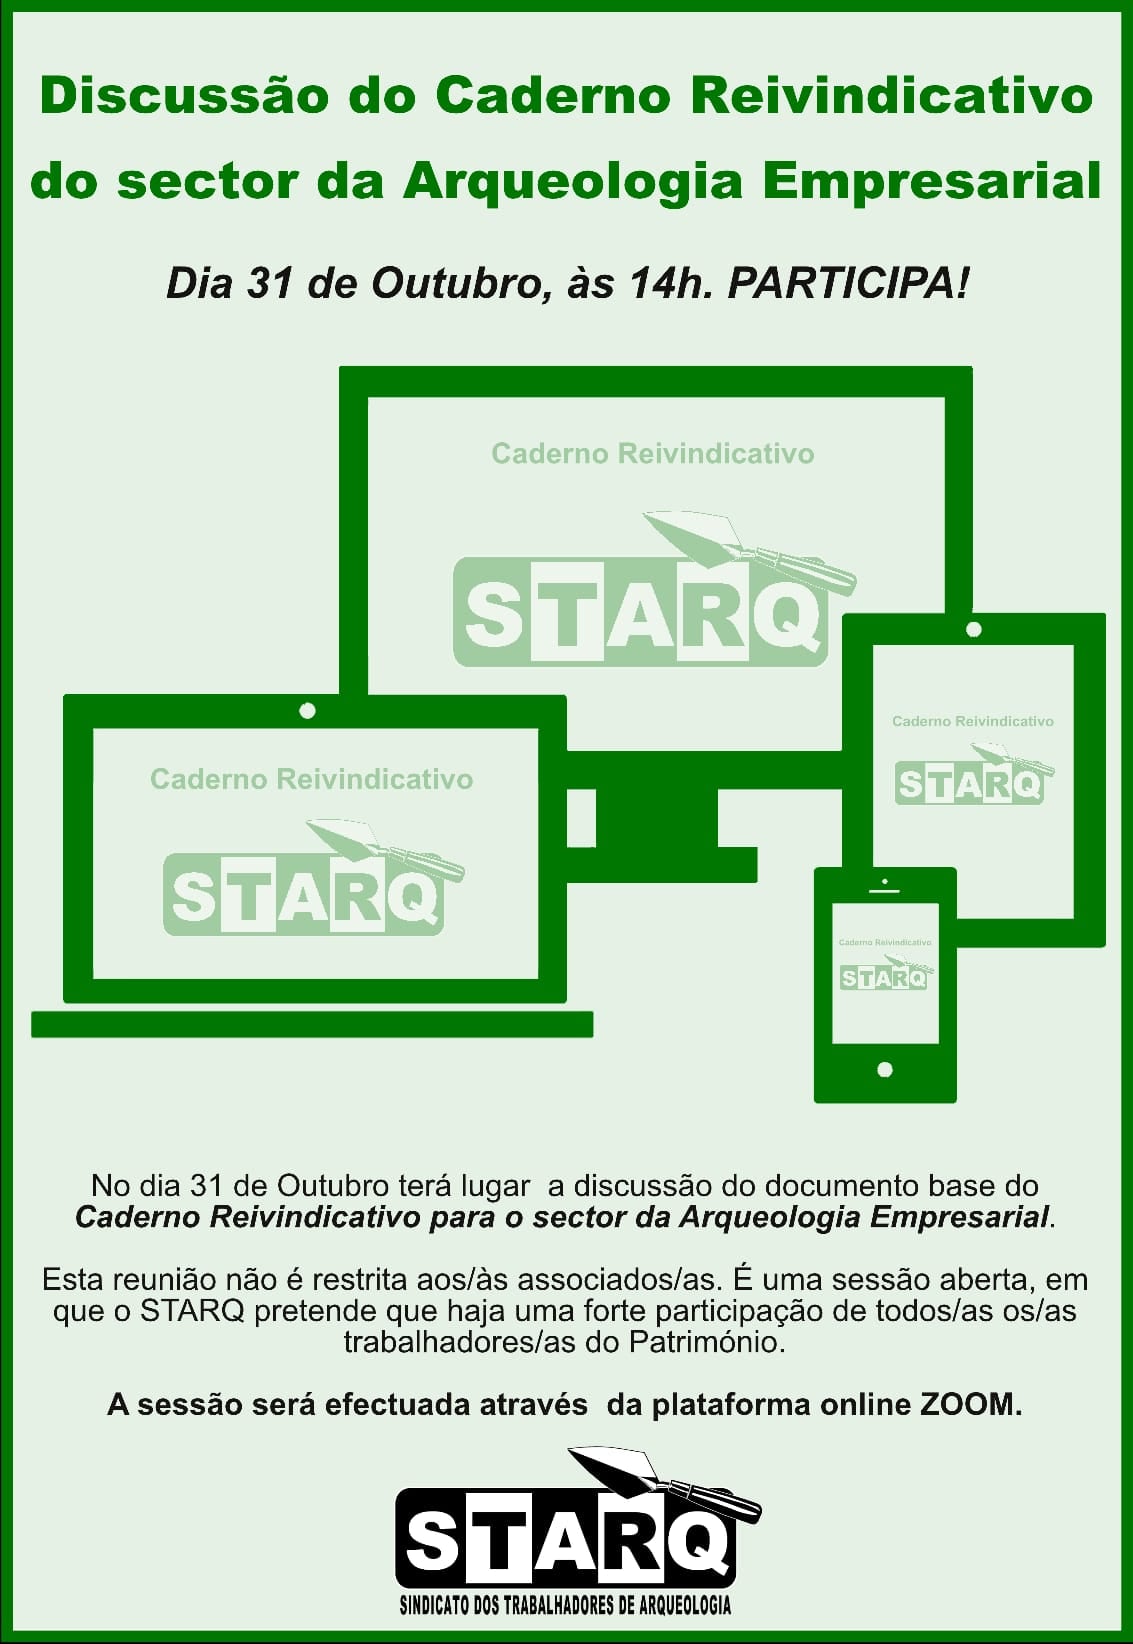 Starq Caderno Reivindicativo.jpg